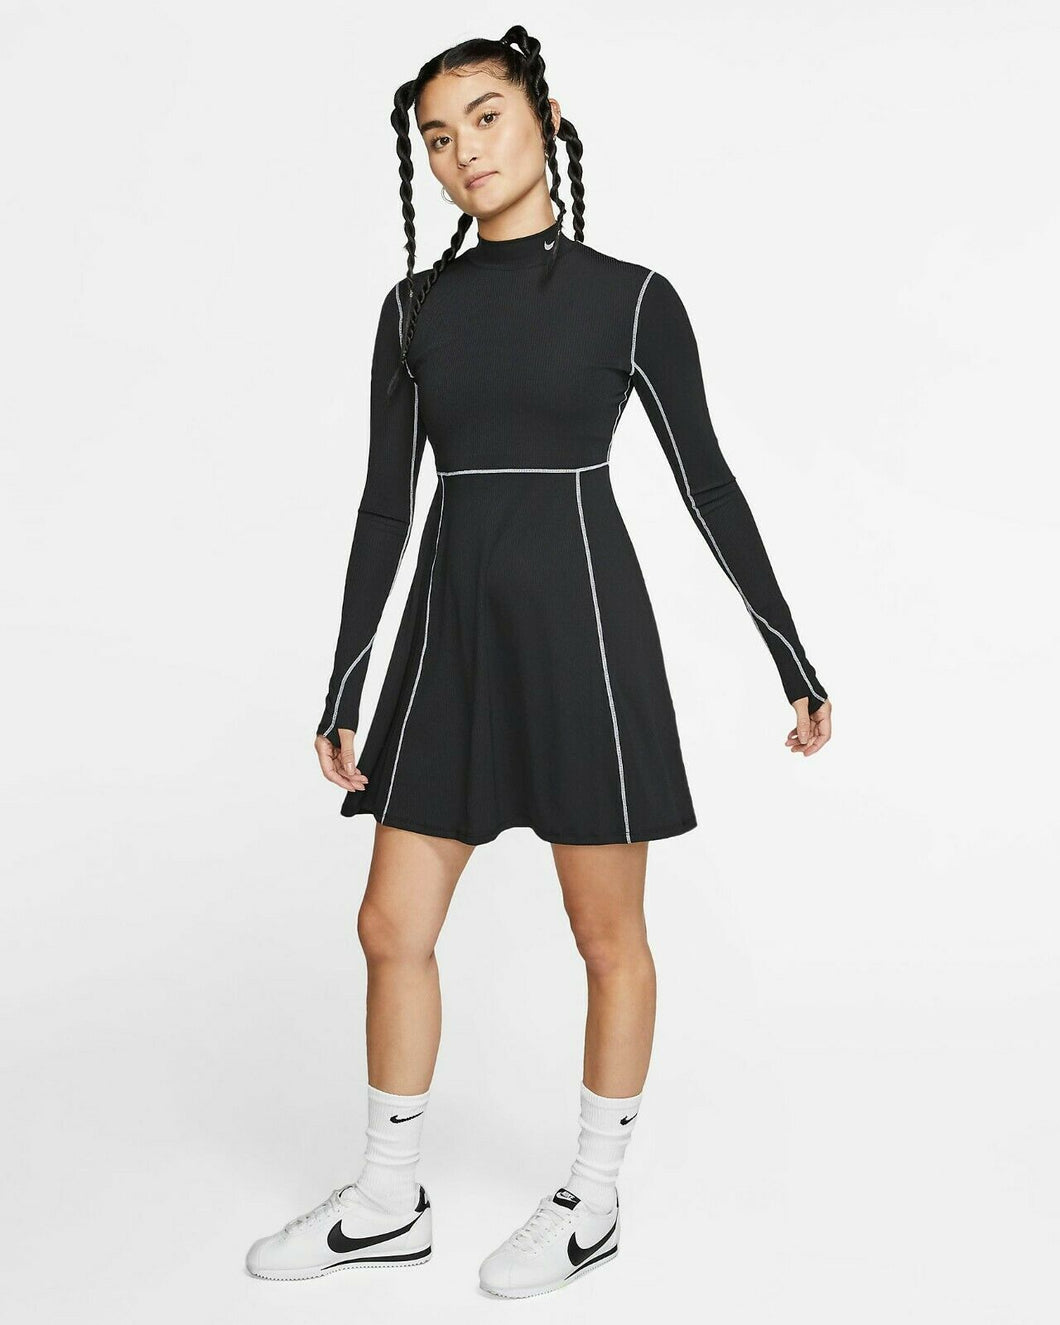 NIKE x OLIVIA KIM Black Silver Glitter Logo NRG Rib Knit Tennis Dress XL (16-18) - Perfume Gallery